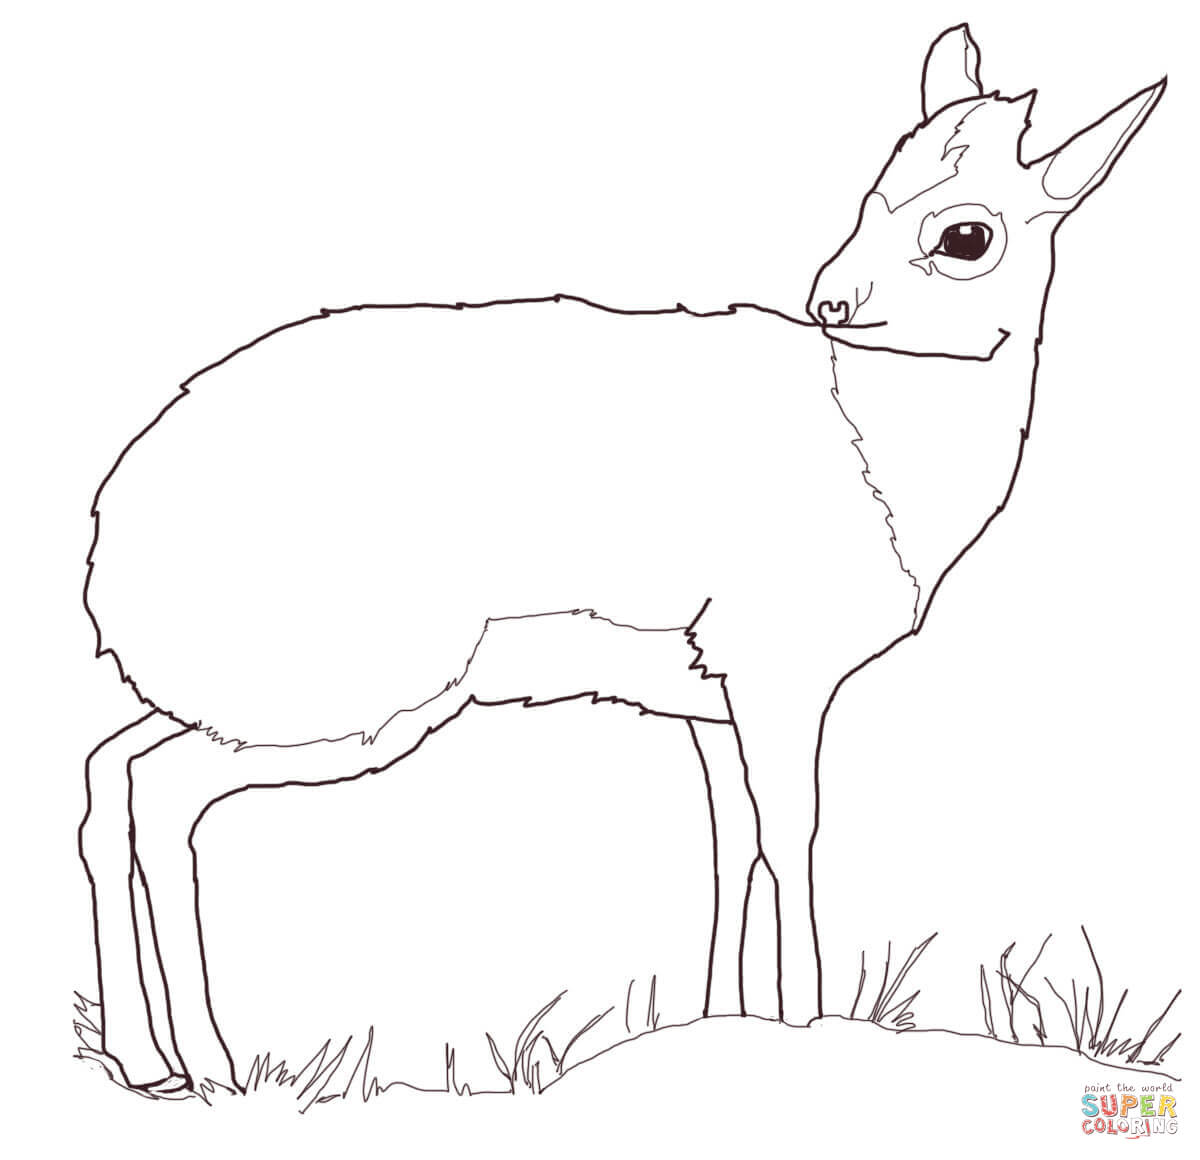 Dik Dik Antelope coloring page | Free Printable Coloring Pages